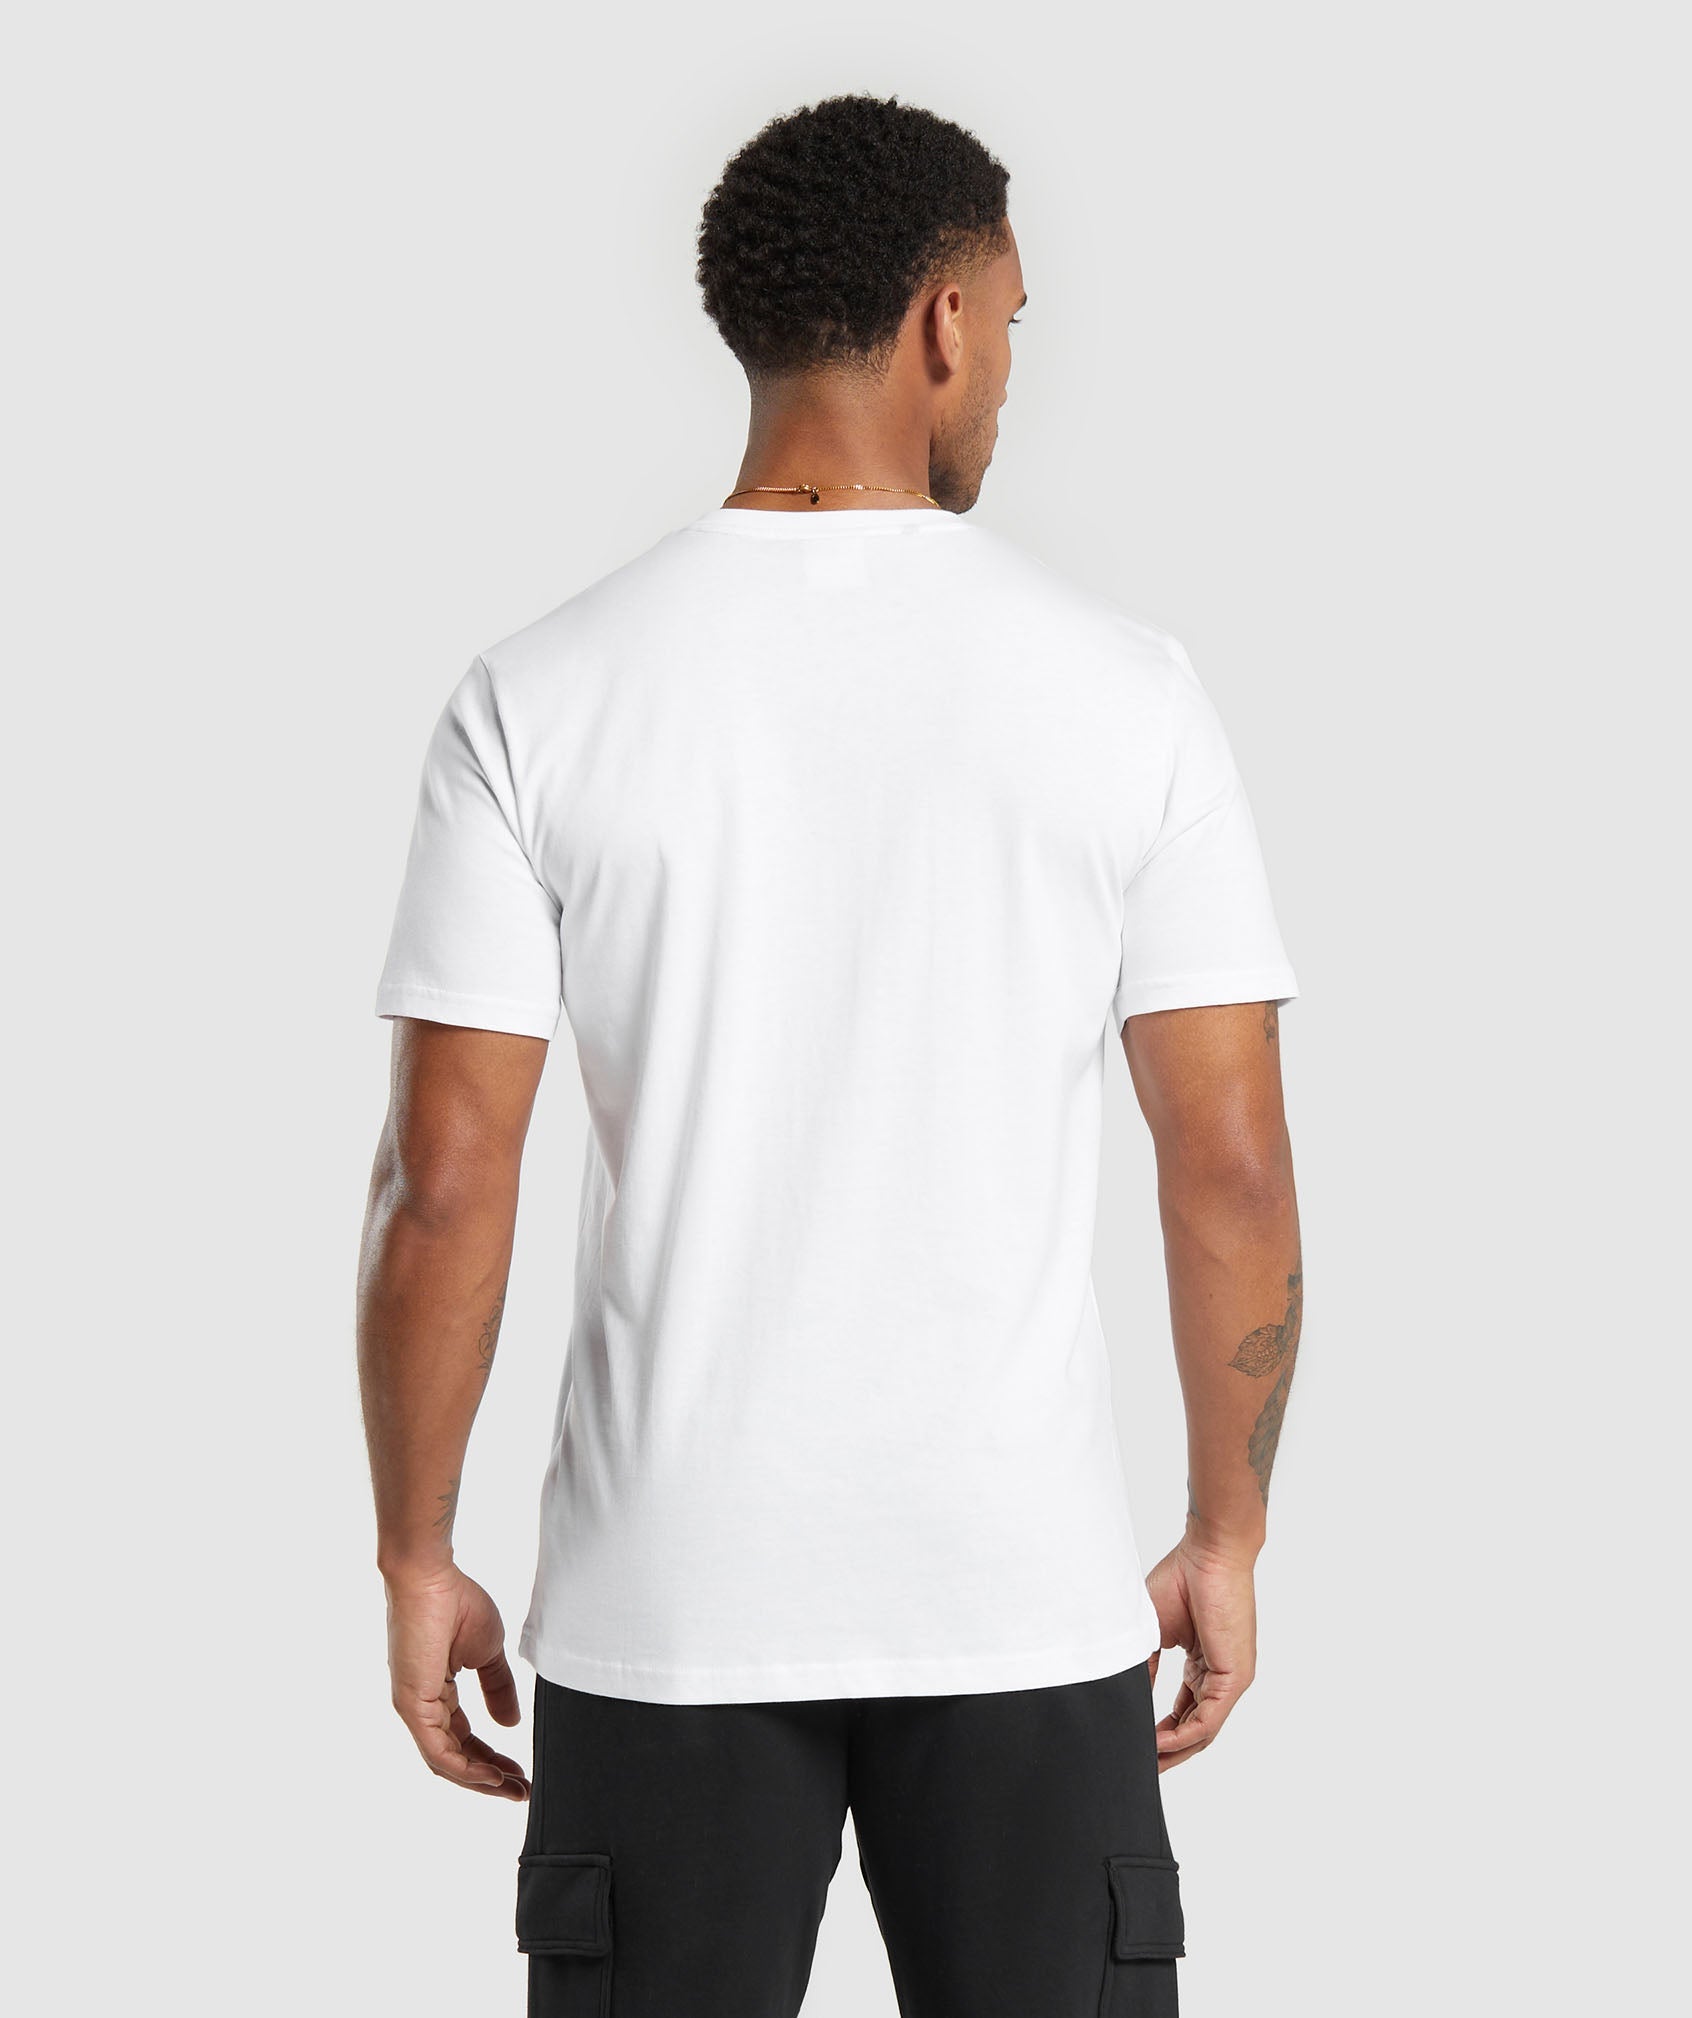 Crest V-Neck T Shirt in White - view 2